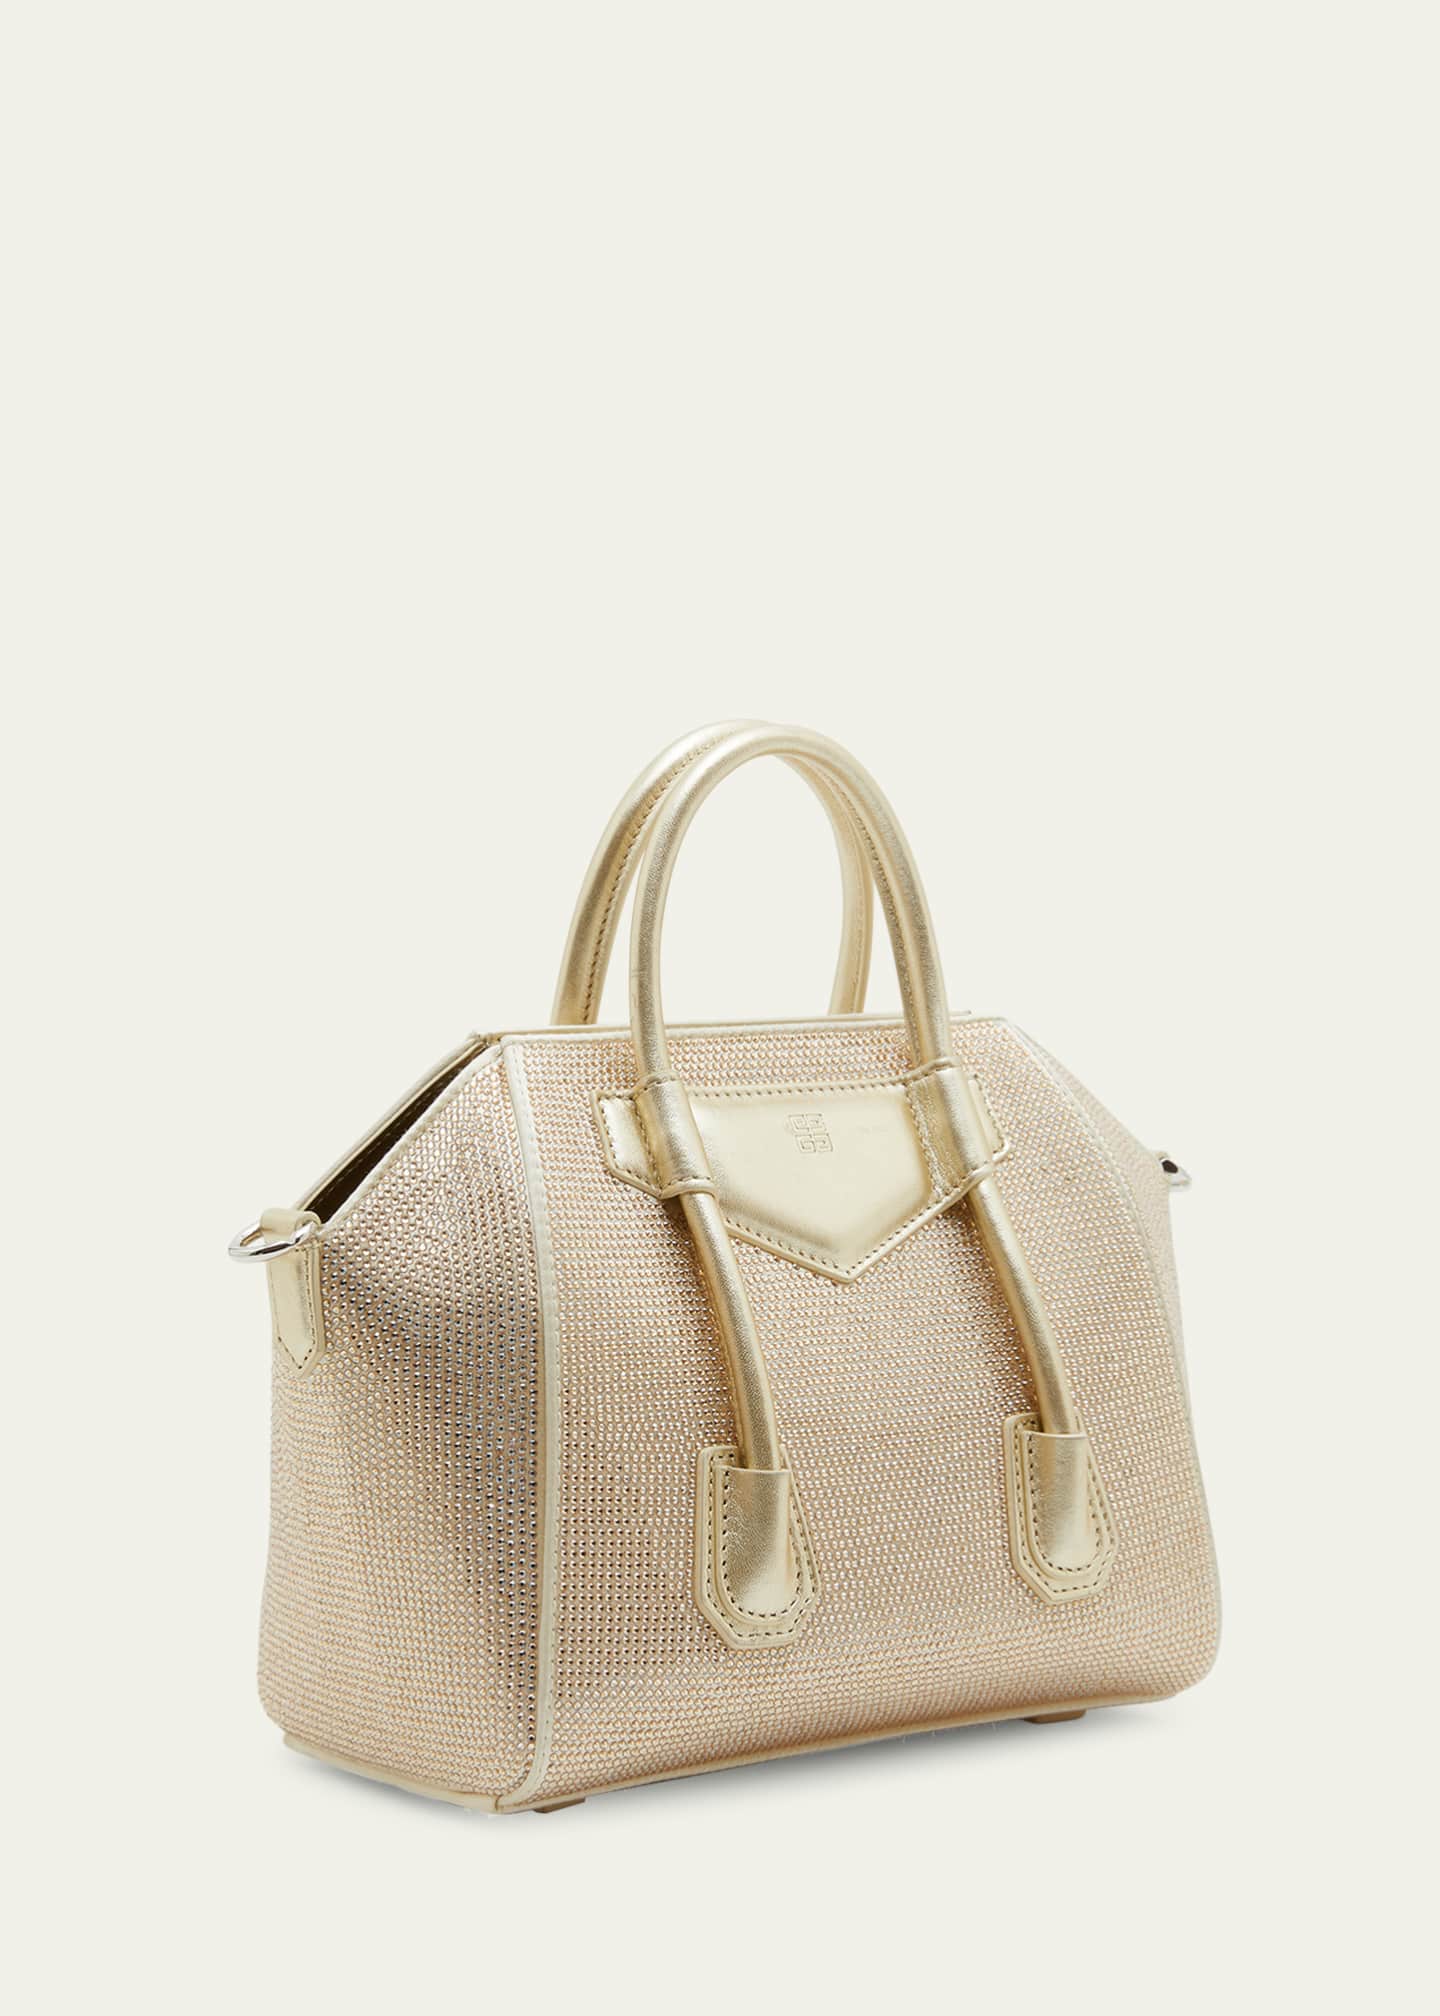 Antigona Lock Mini Embellished Tote Bag in Gold - Givenchy